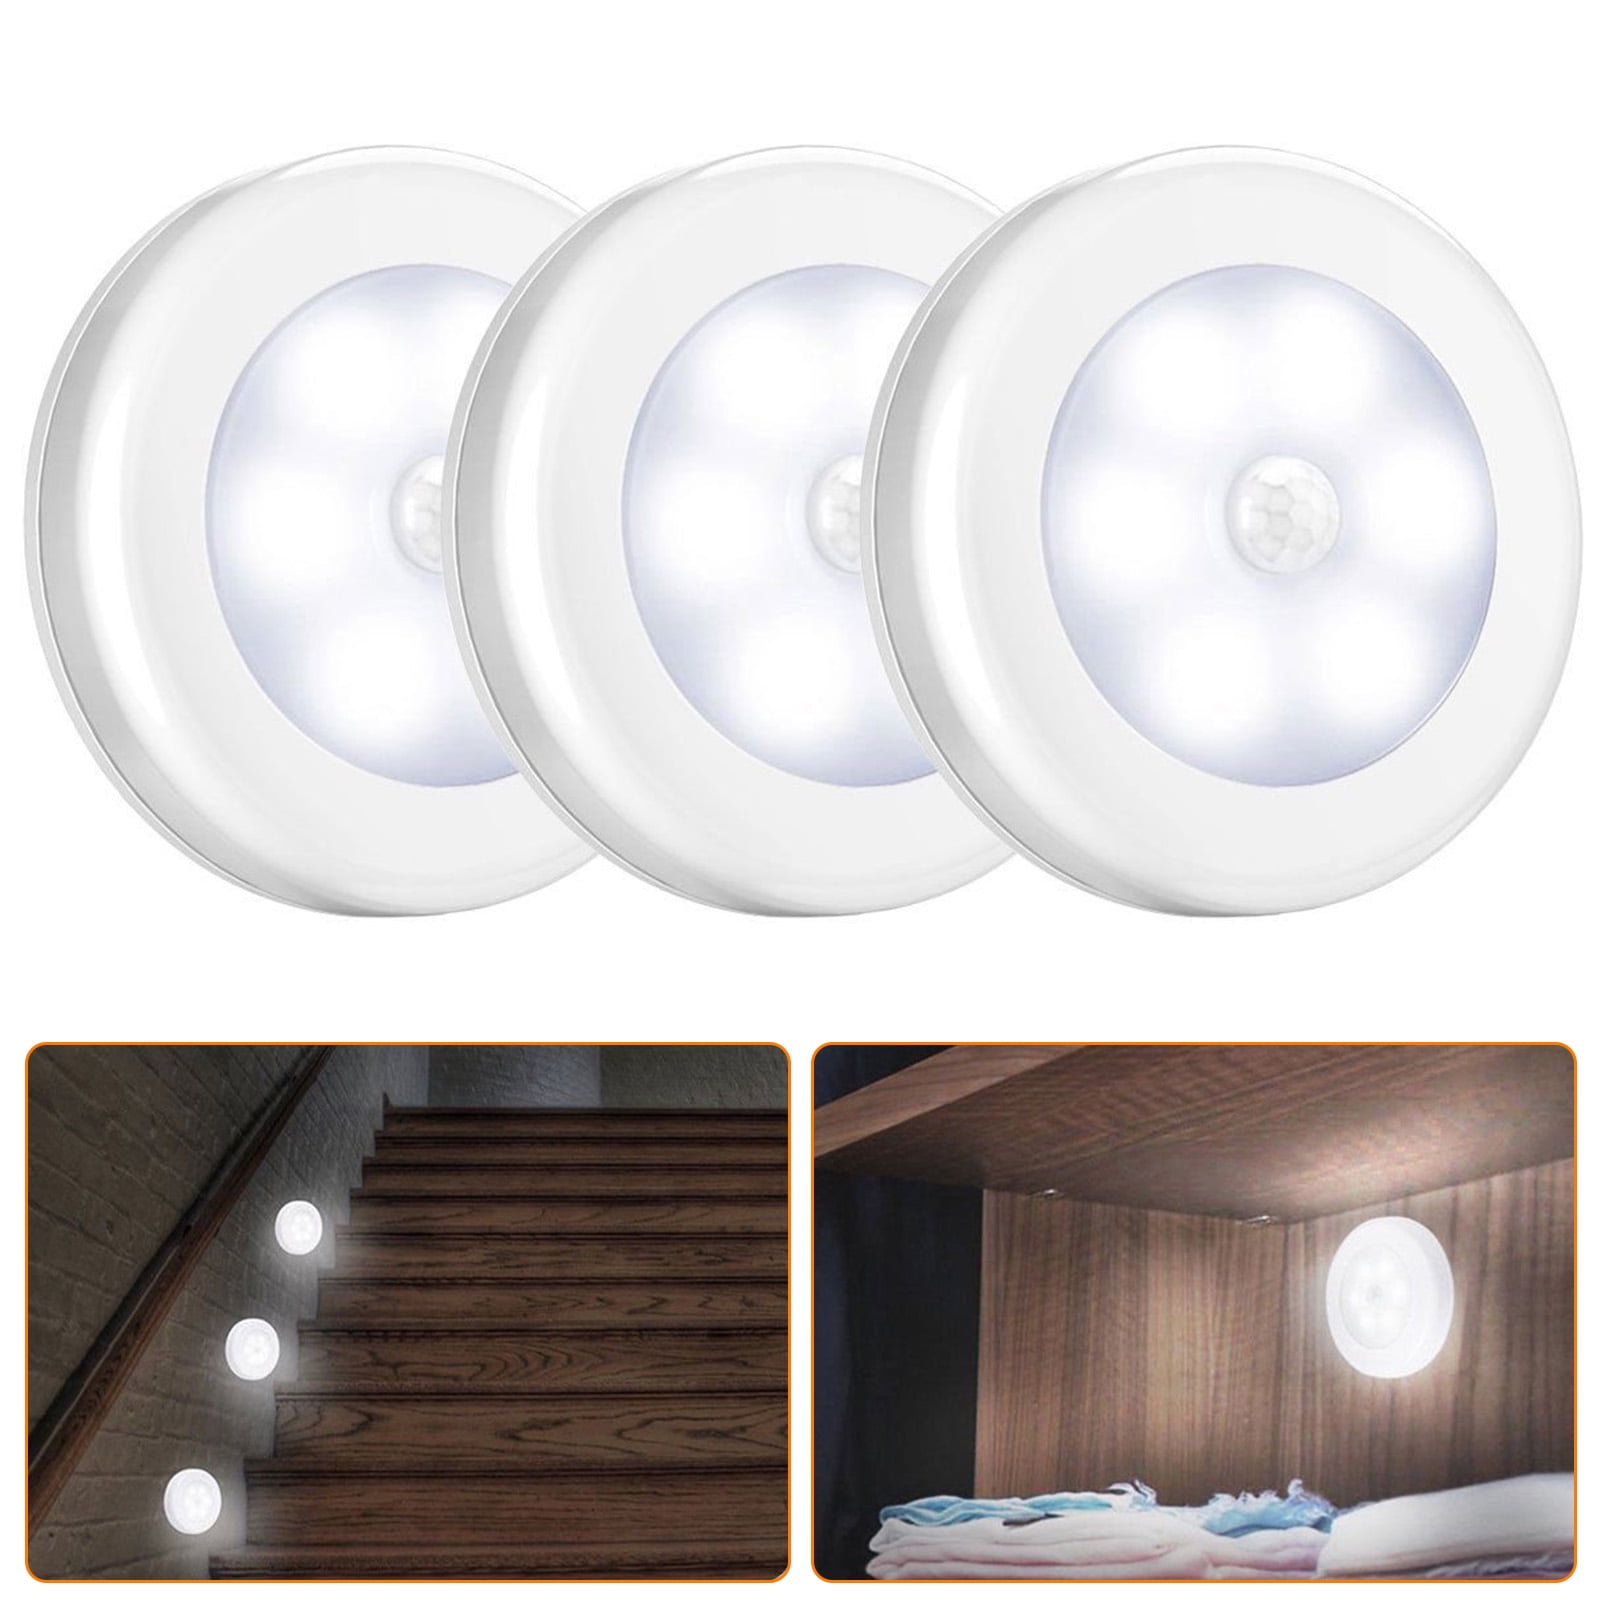 6 LED Night Light Motion Sensor Wall Closet Cabinet Stair Wireless Light Home